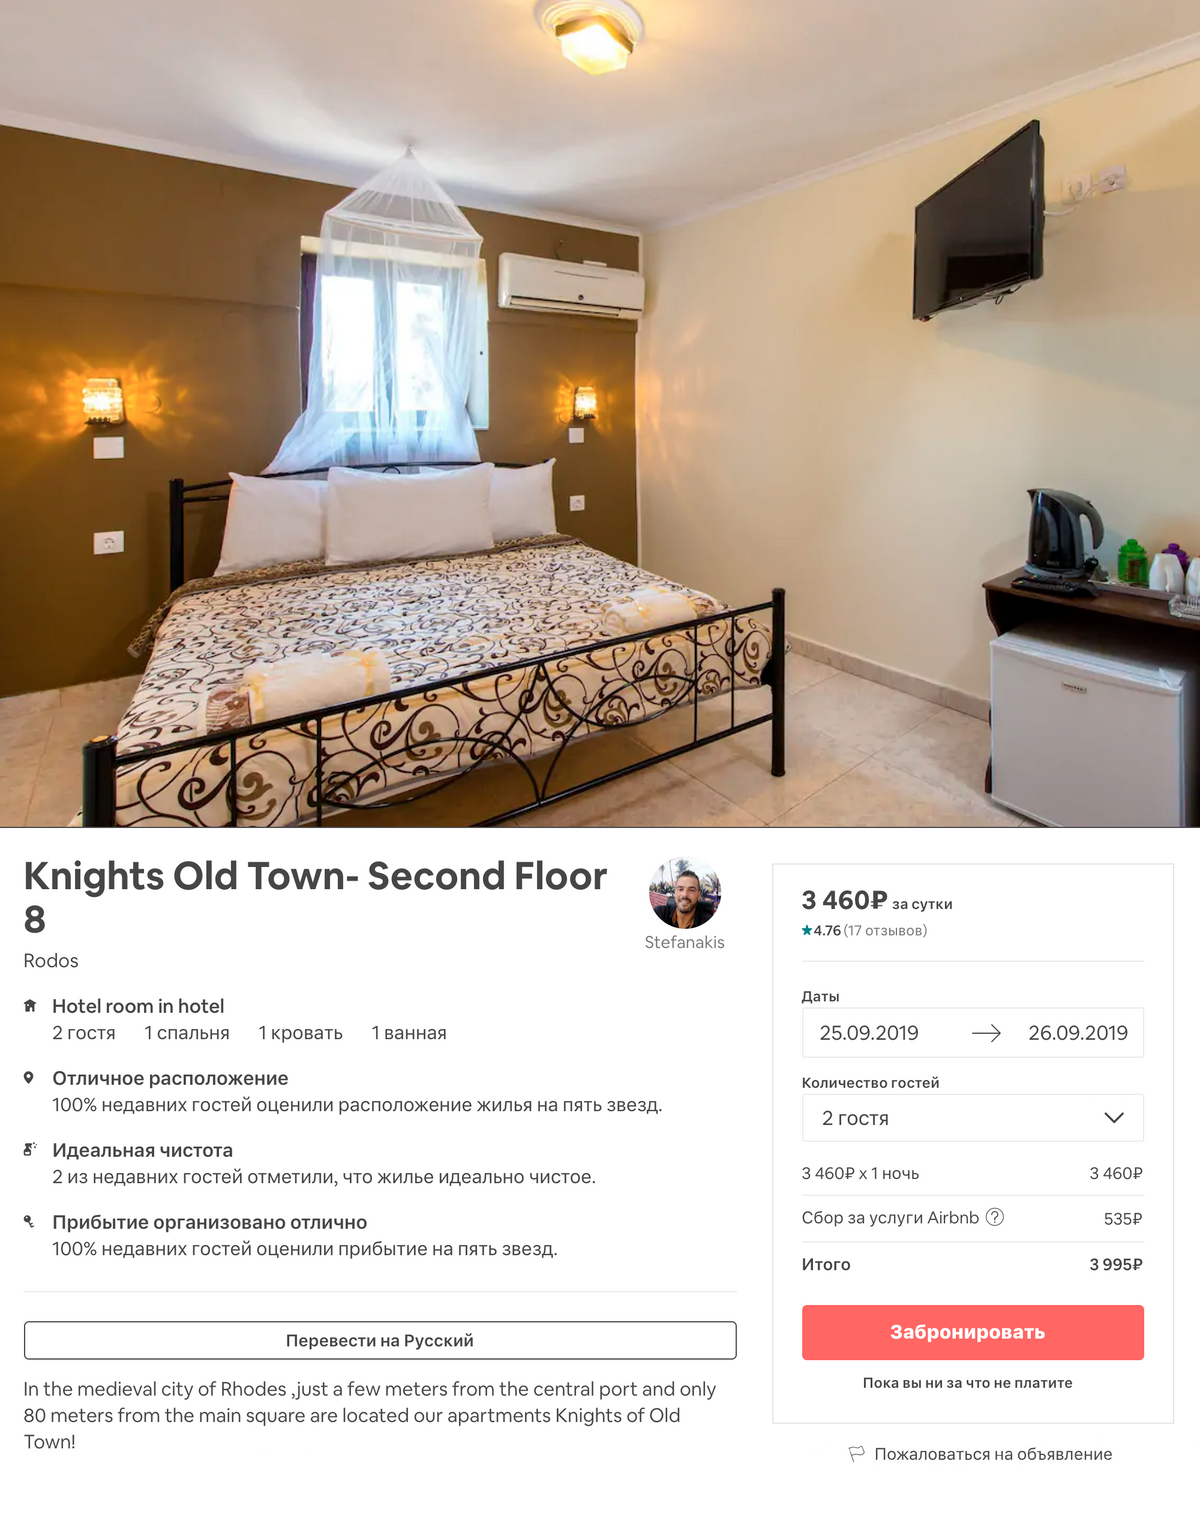 3640 <span class=ruble>Р</span> за сутки — стандартная цена за номер в гостинице в центре города Родос в сентябре 2019 года. Но это цена без комиссии Airbnb